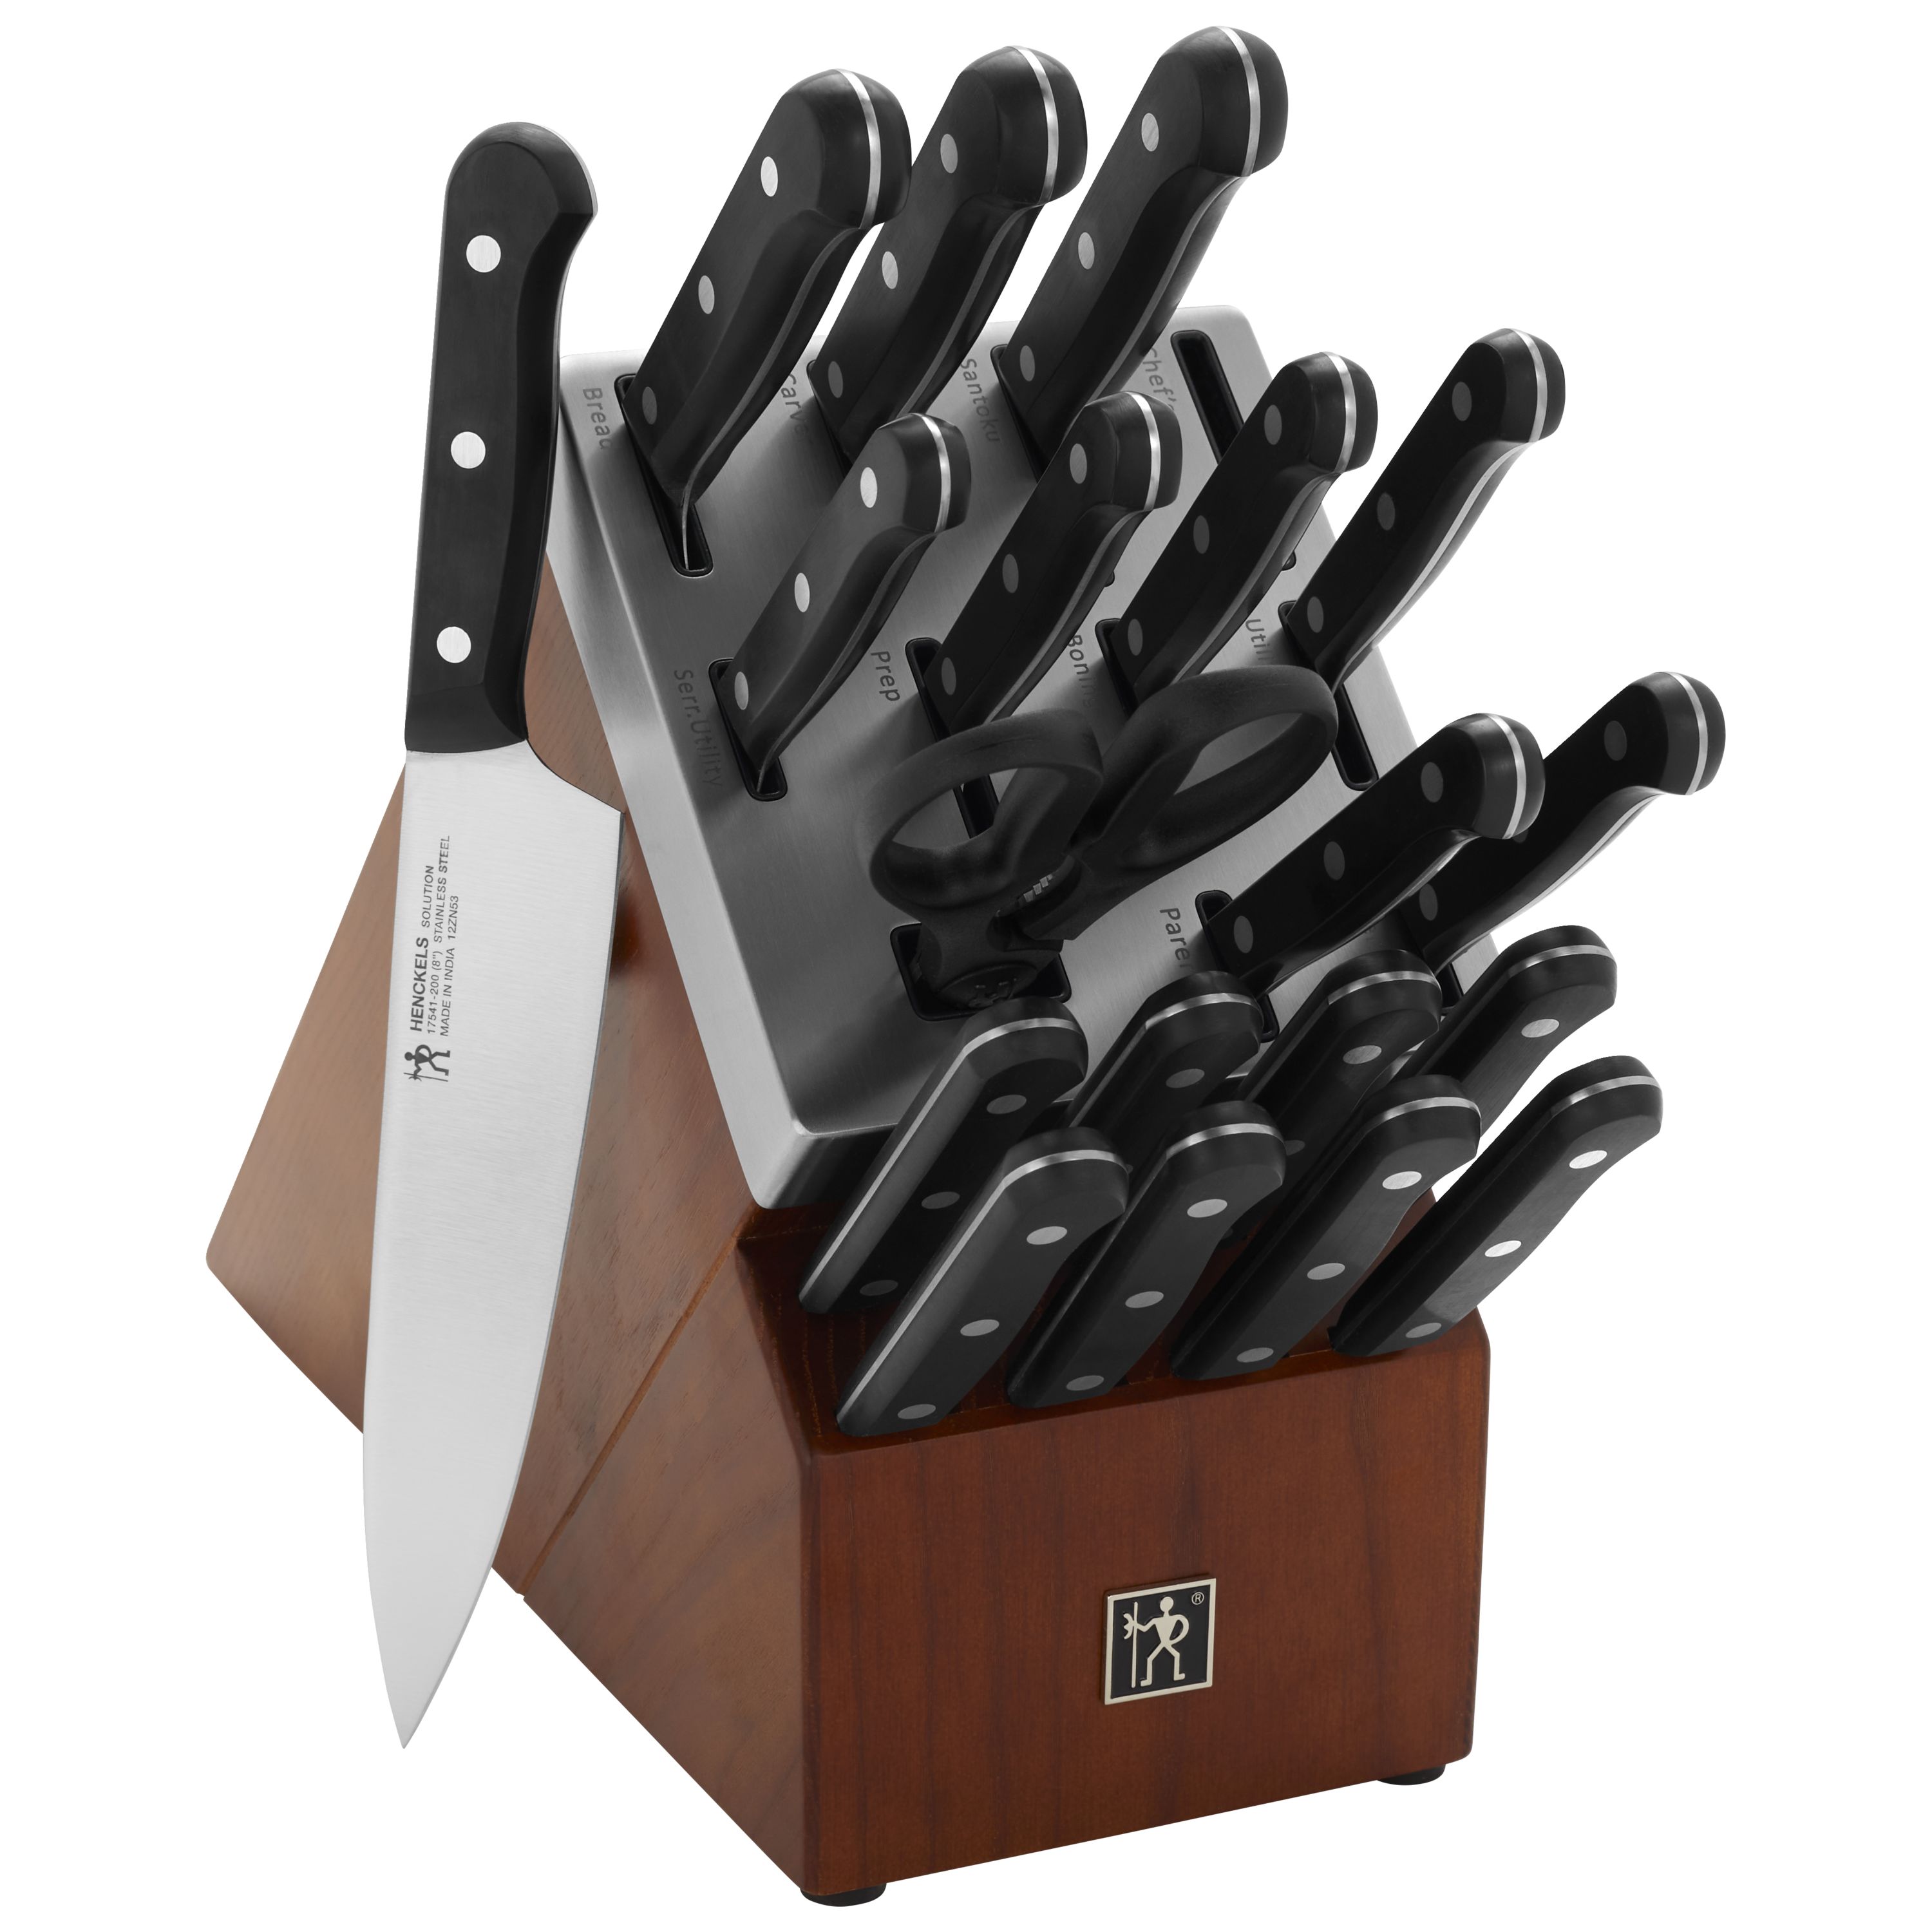 Henckels Definition Self Sharpening Wood Knife Block Combo - 14 pc